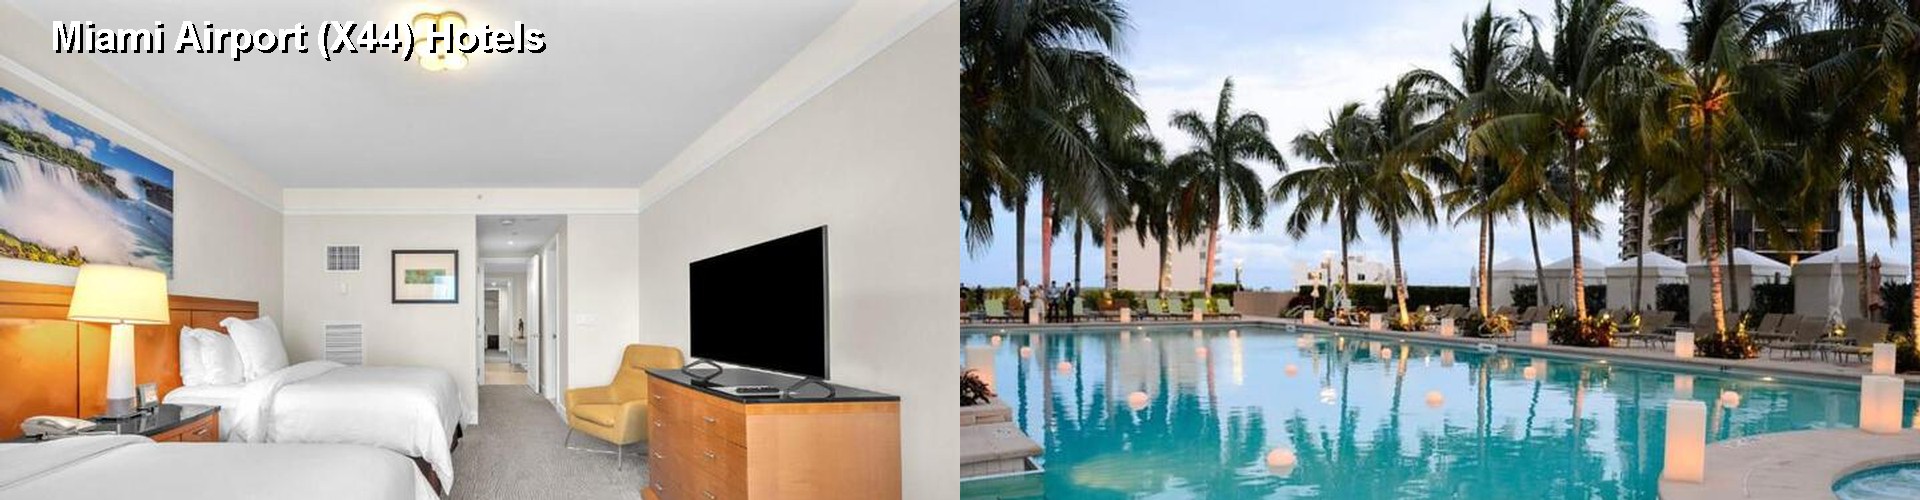 5 Best Hotels near Miami Airport (X44)